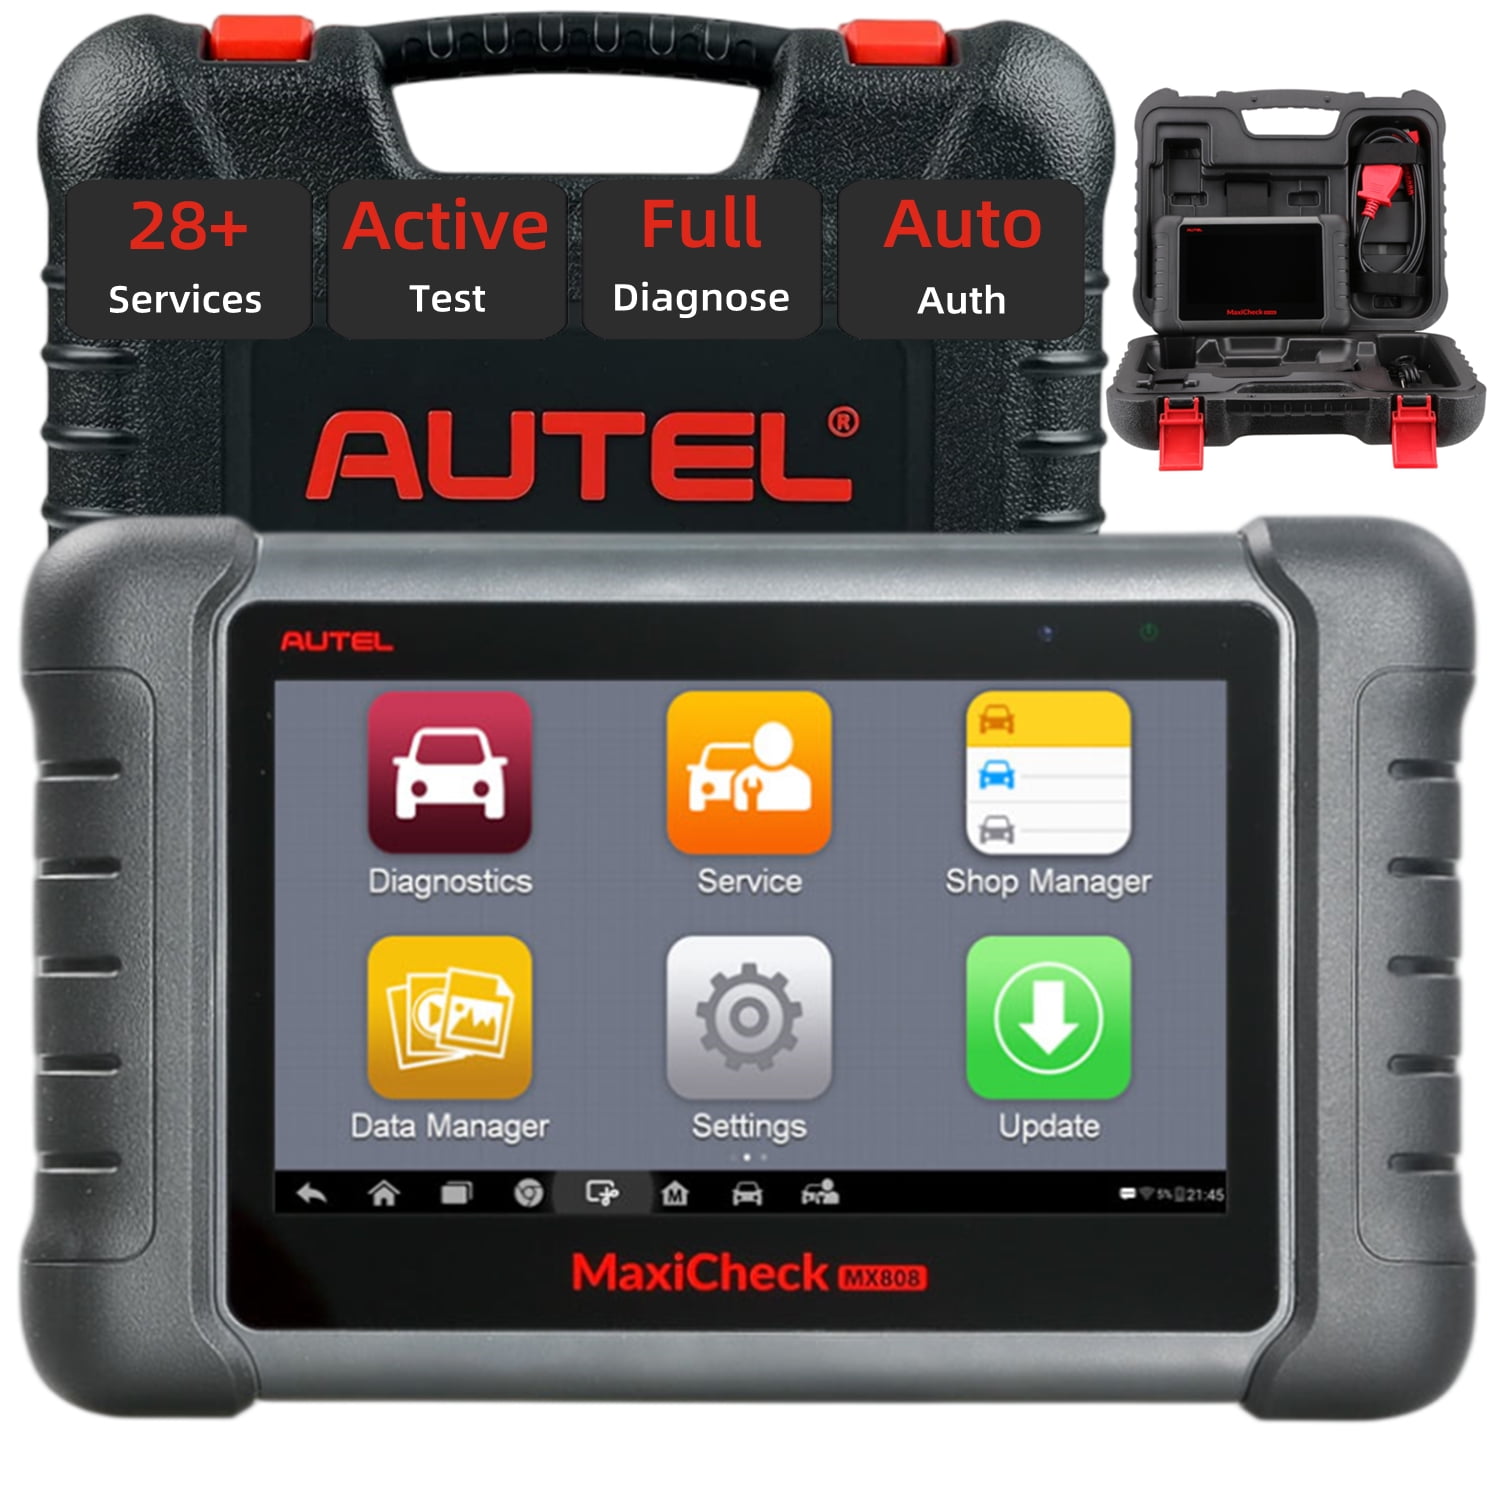 Autel MX808 MaxiCheck All System & Service Diagnostic Tablet, USA Version